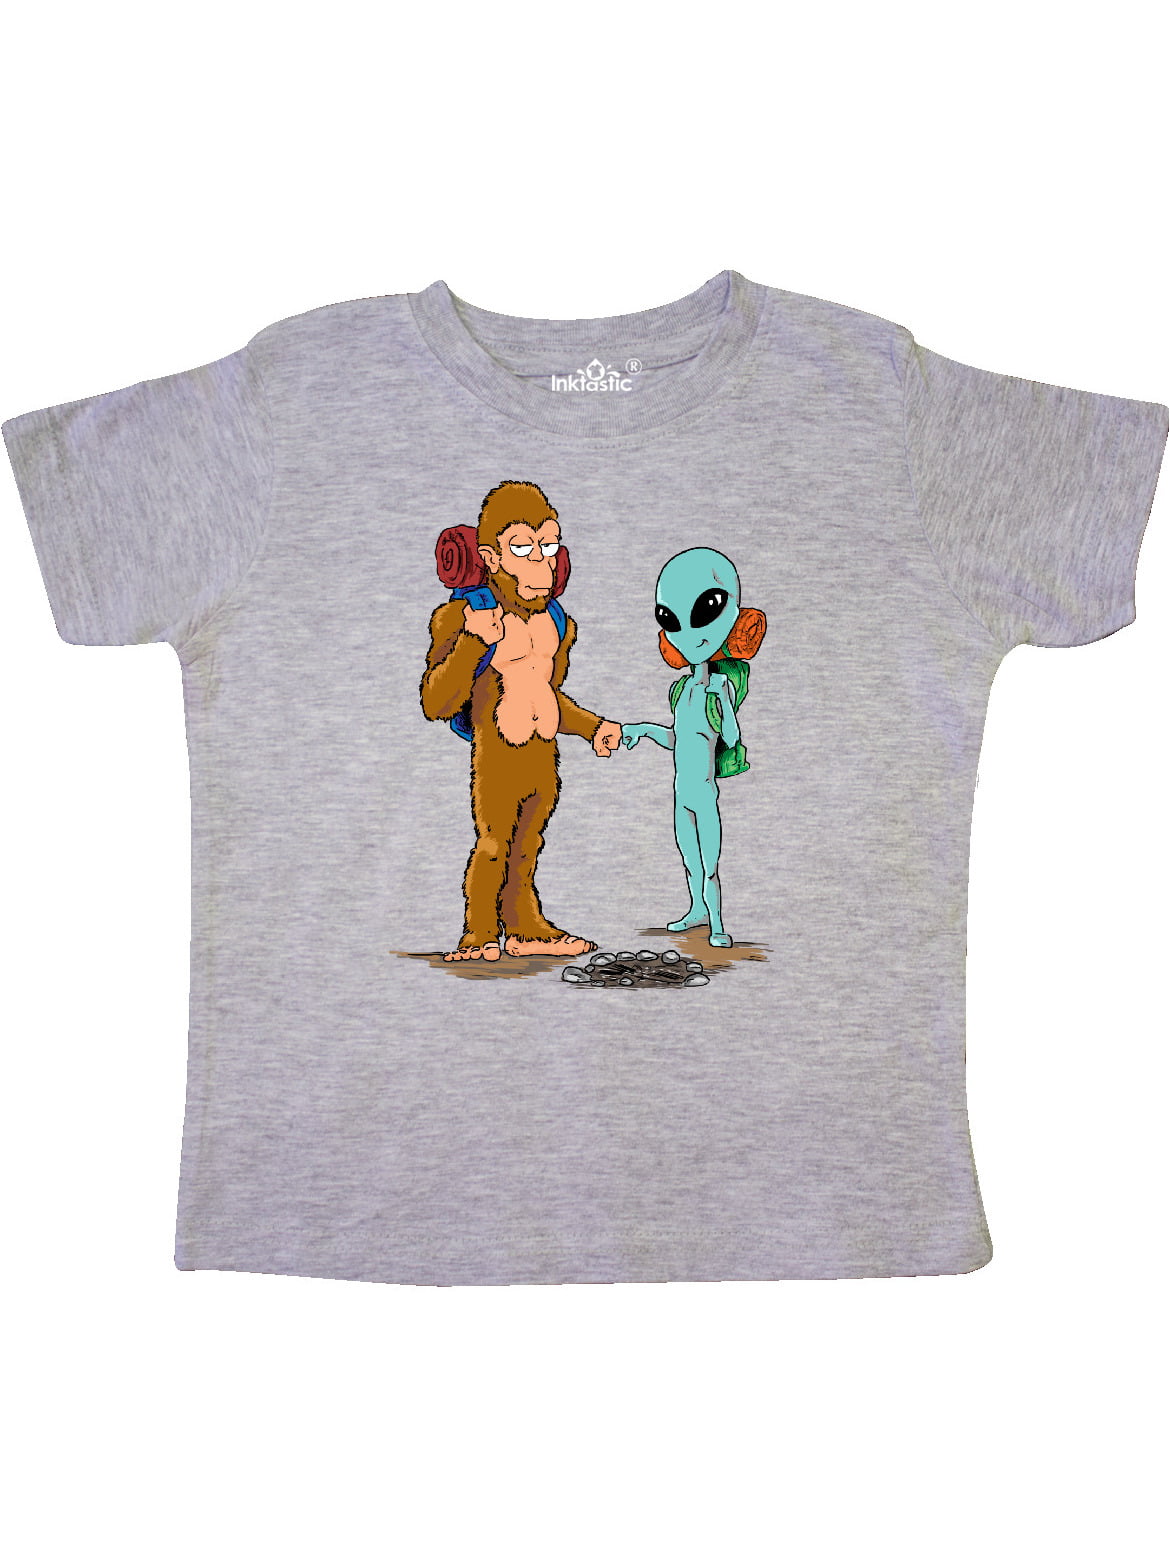 UFO Bigfoot Childrens Cotton Gray Short Sleeve T-Shirt for Girl